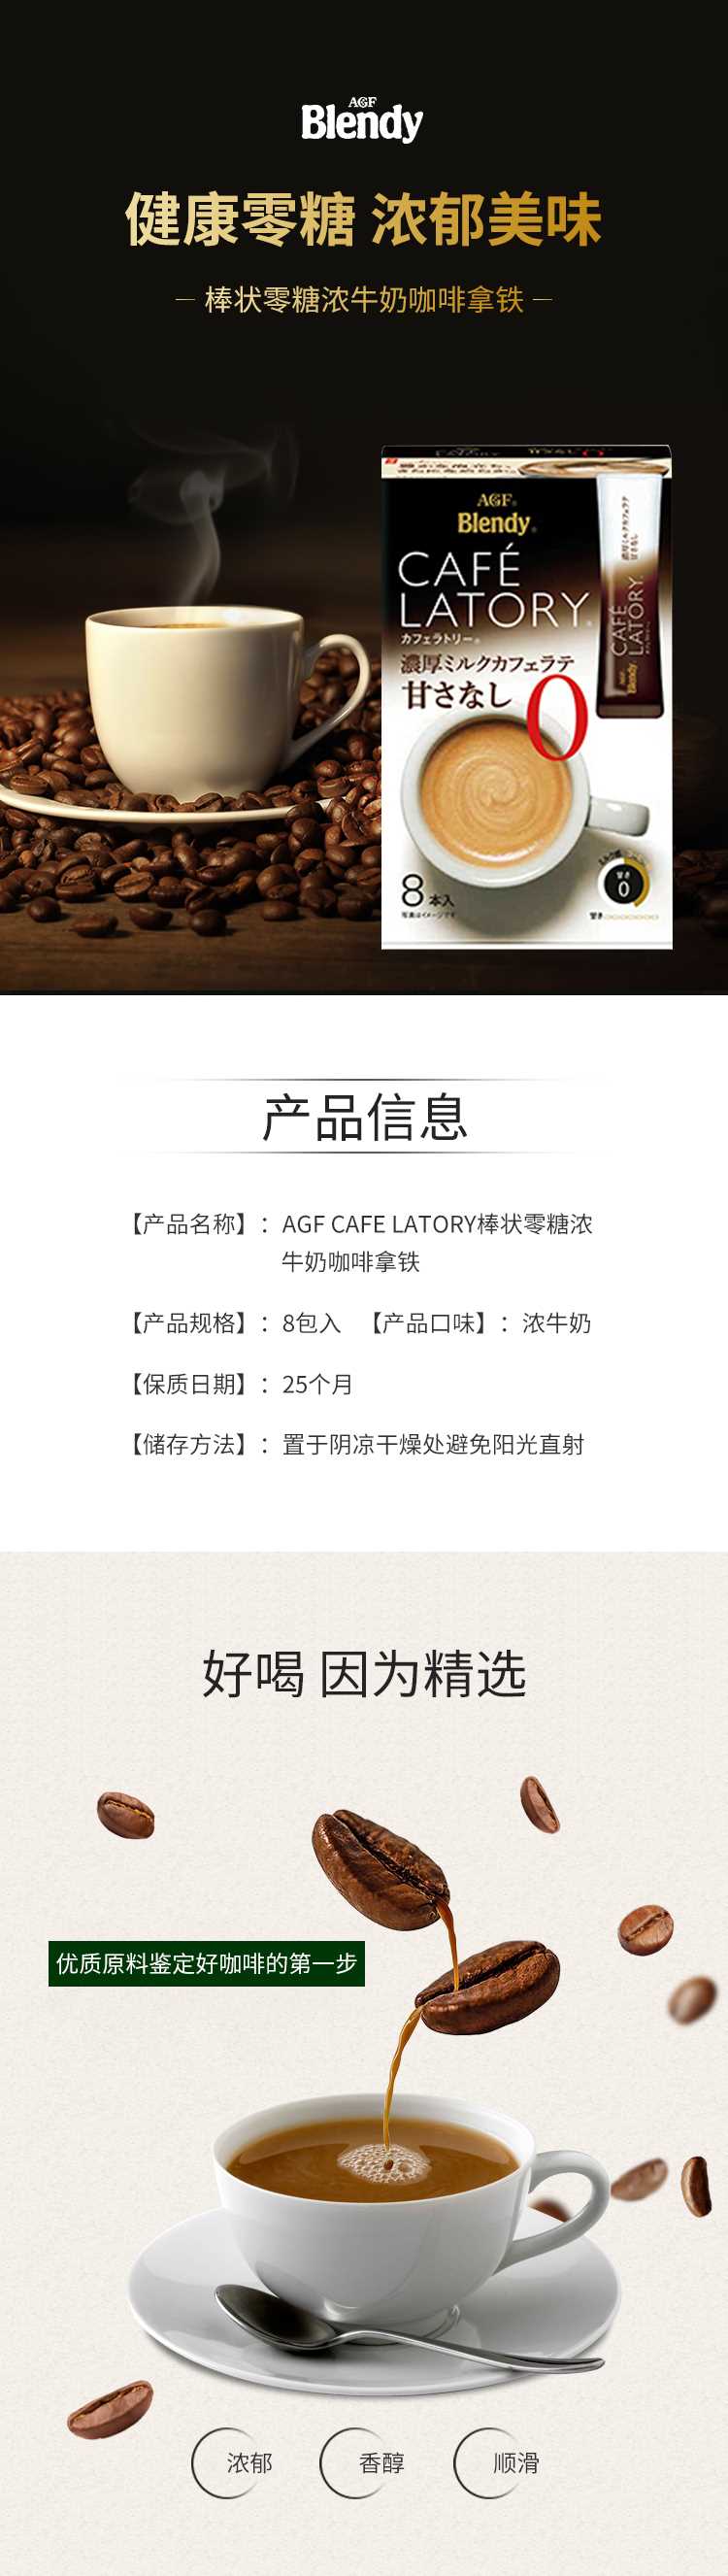 AGF-CAFE-LATORY棒状零糖浓牛奶咖啡拿铁8包入_01.jpg